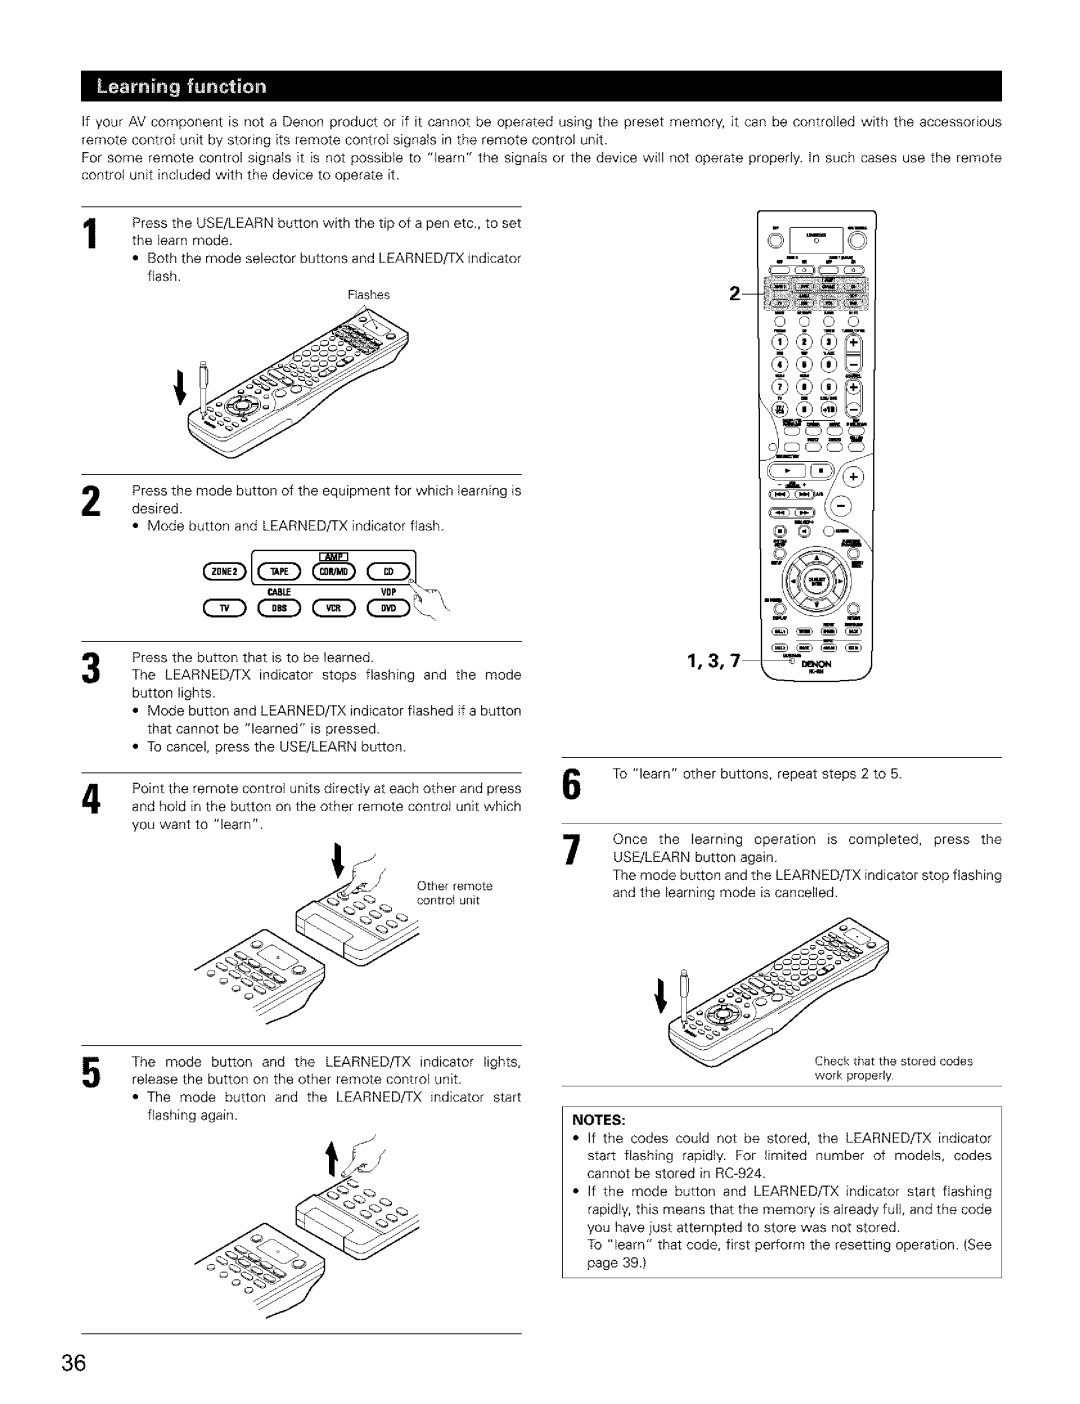 Denon AVR-2803/983 manual Flashes, Notes 